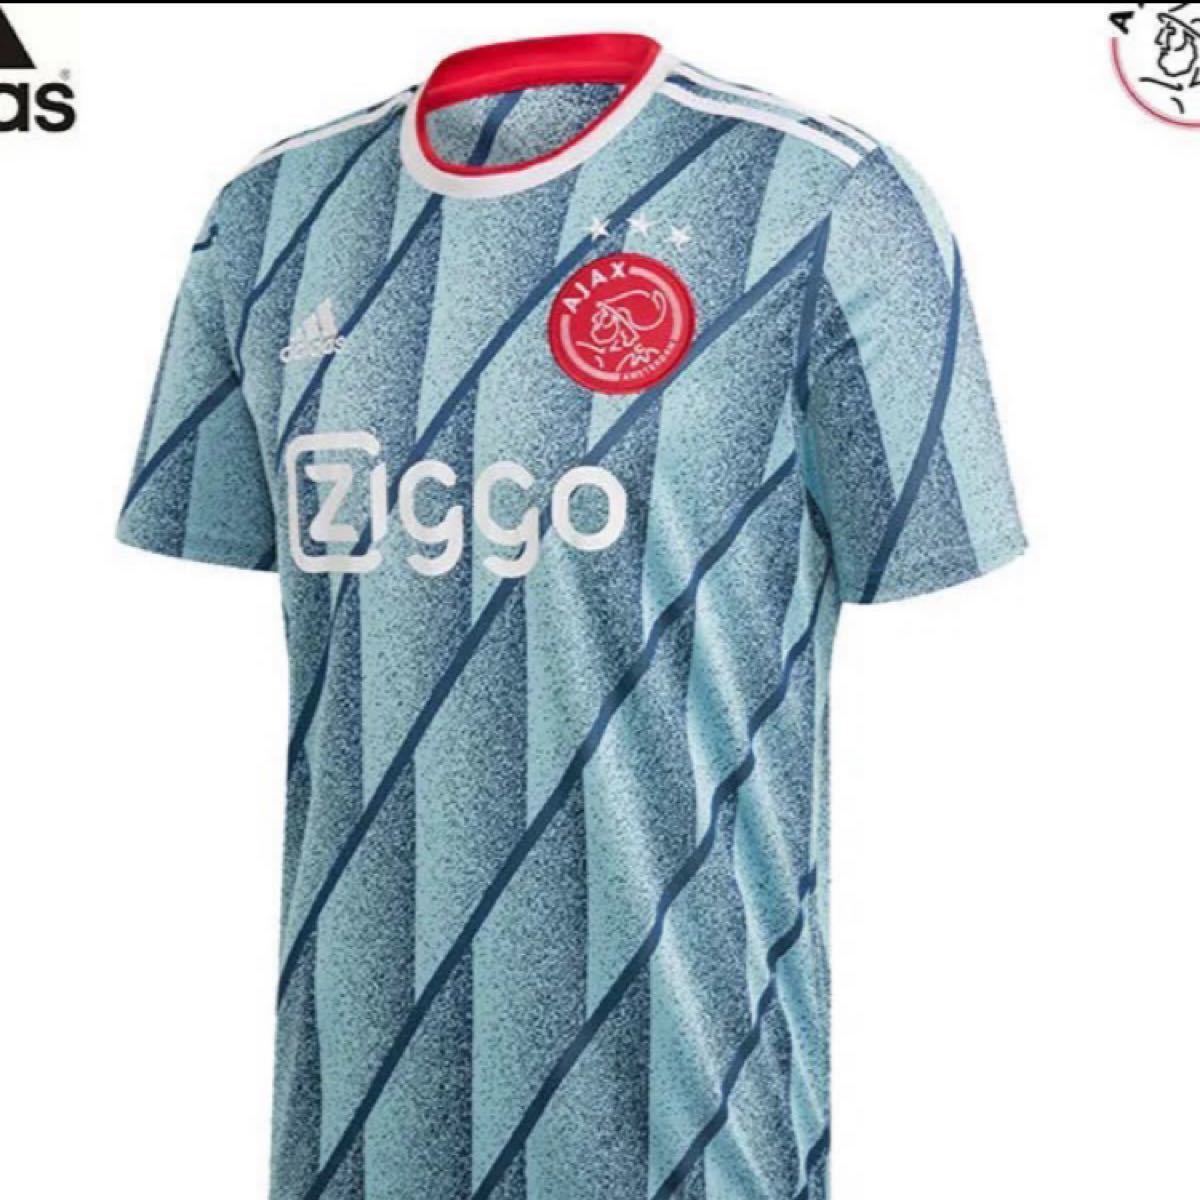 Paypayフリマ 新品タグ付き 21シーズン Ajaxアヤックスユニフォーム Lサイズ サッカー フットサル